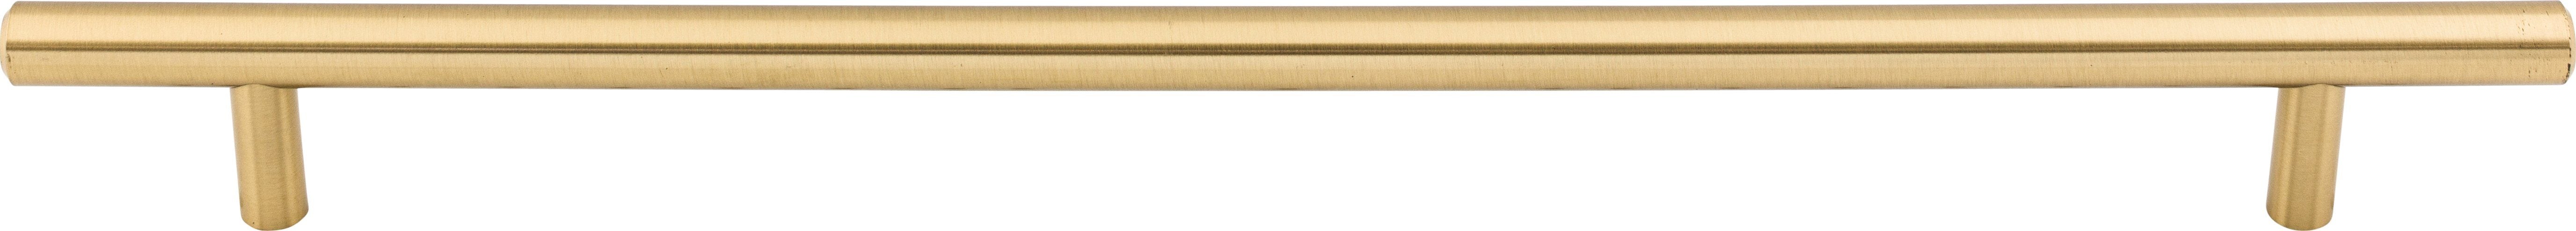 Top Knobs M2425 15in (381mm) Hopewell Bar Pull Honey Bronze - KnobDepot